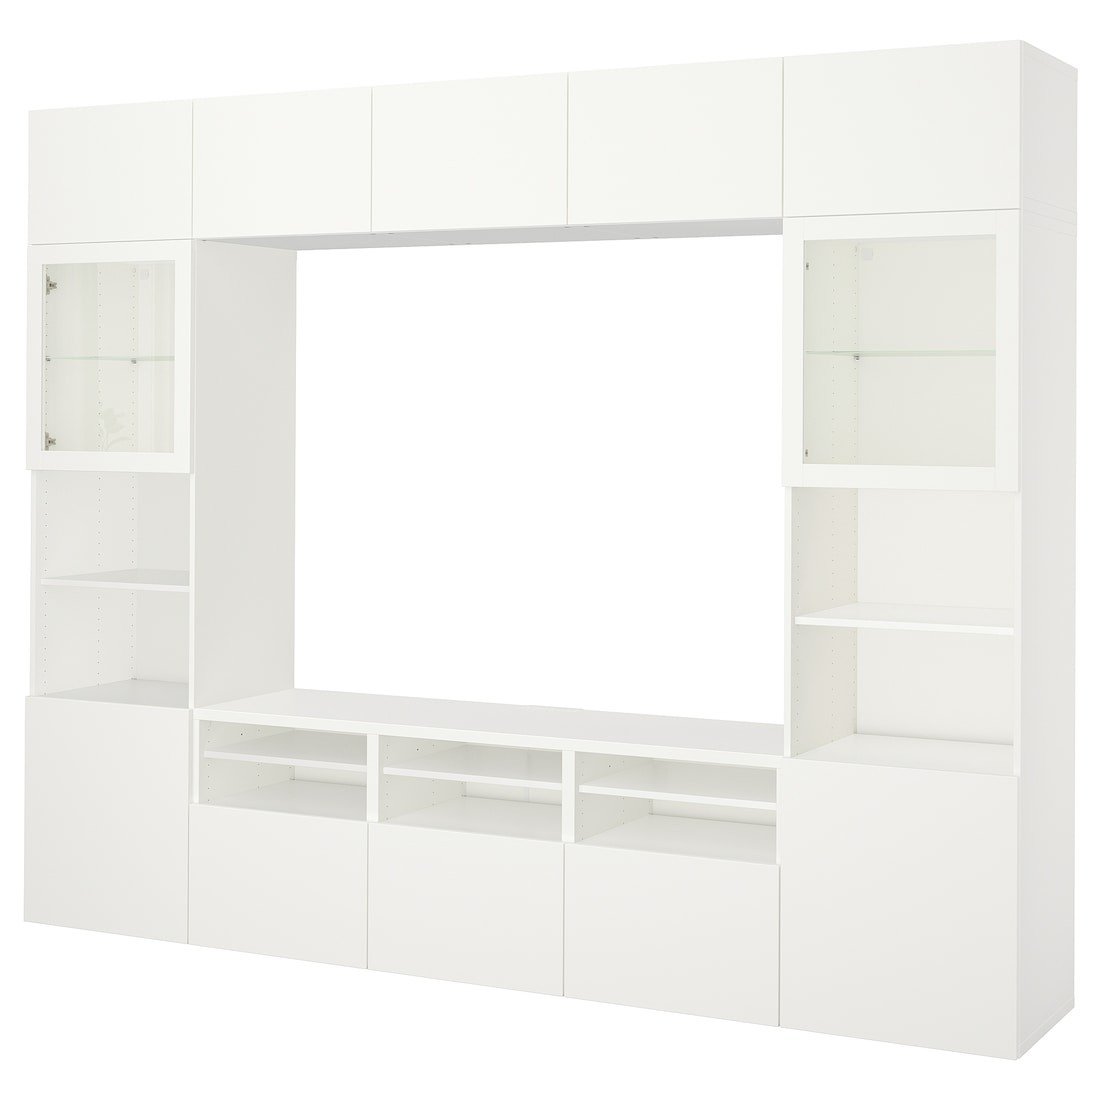 BESTÅ БЕСТО Комбинация для ТВ / стеклянные двери, белый / Lappviken белое стекло прозрачное, 300x42x231 см